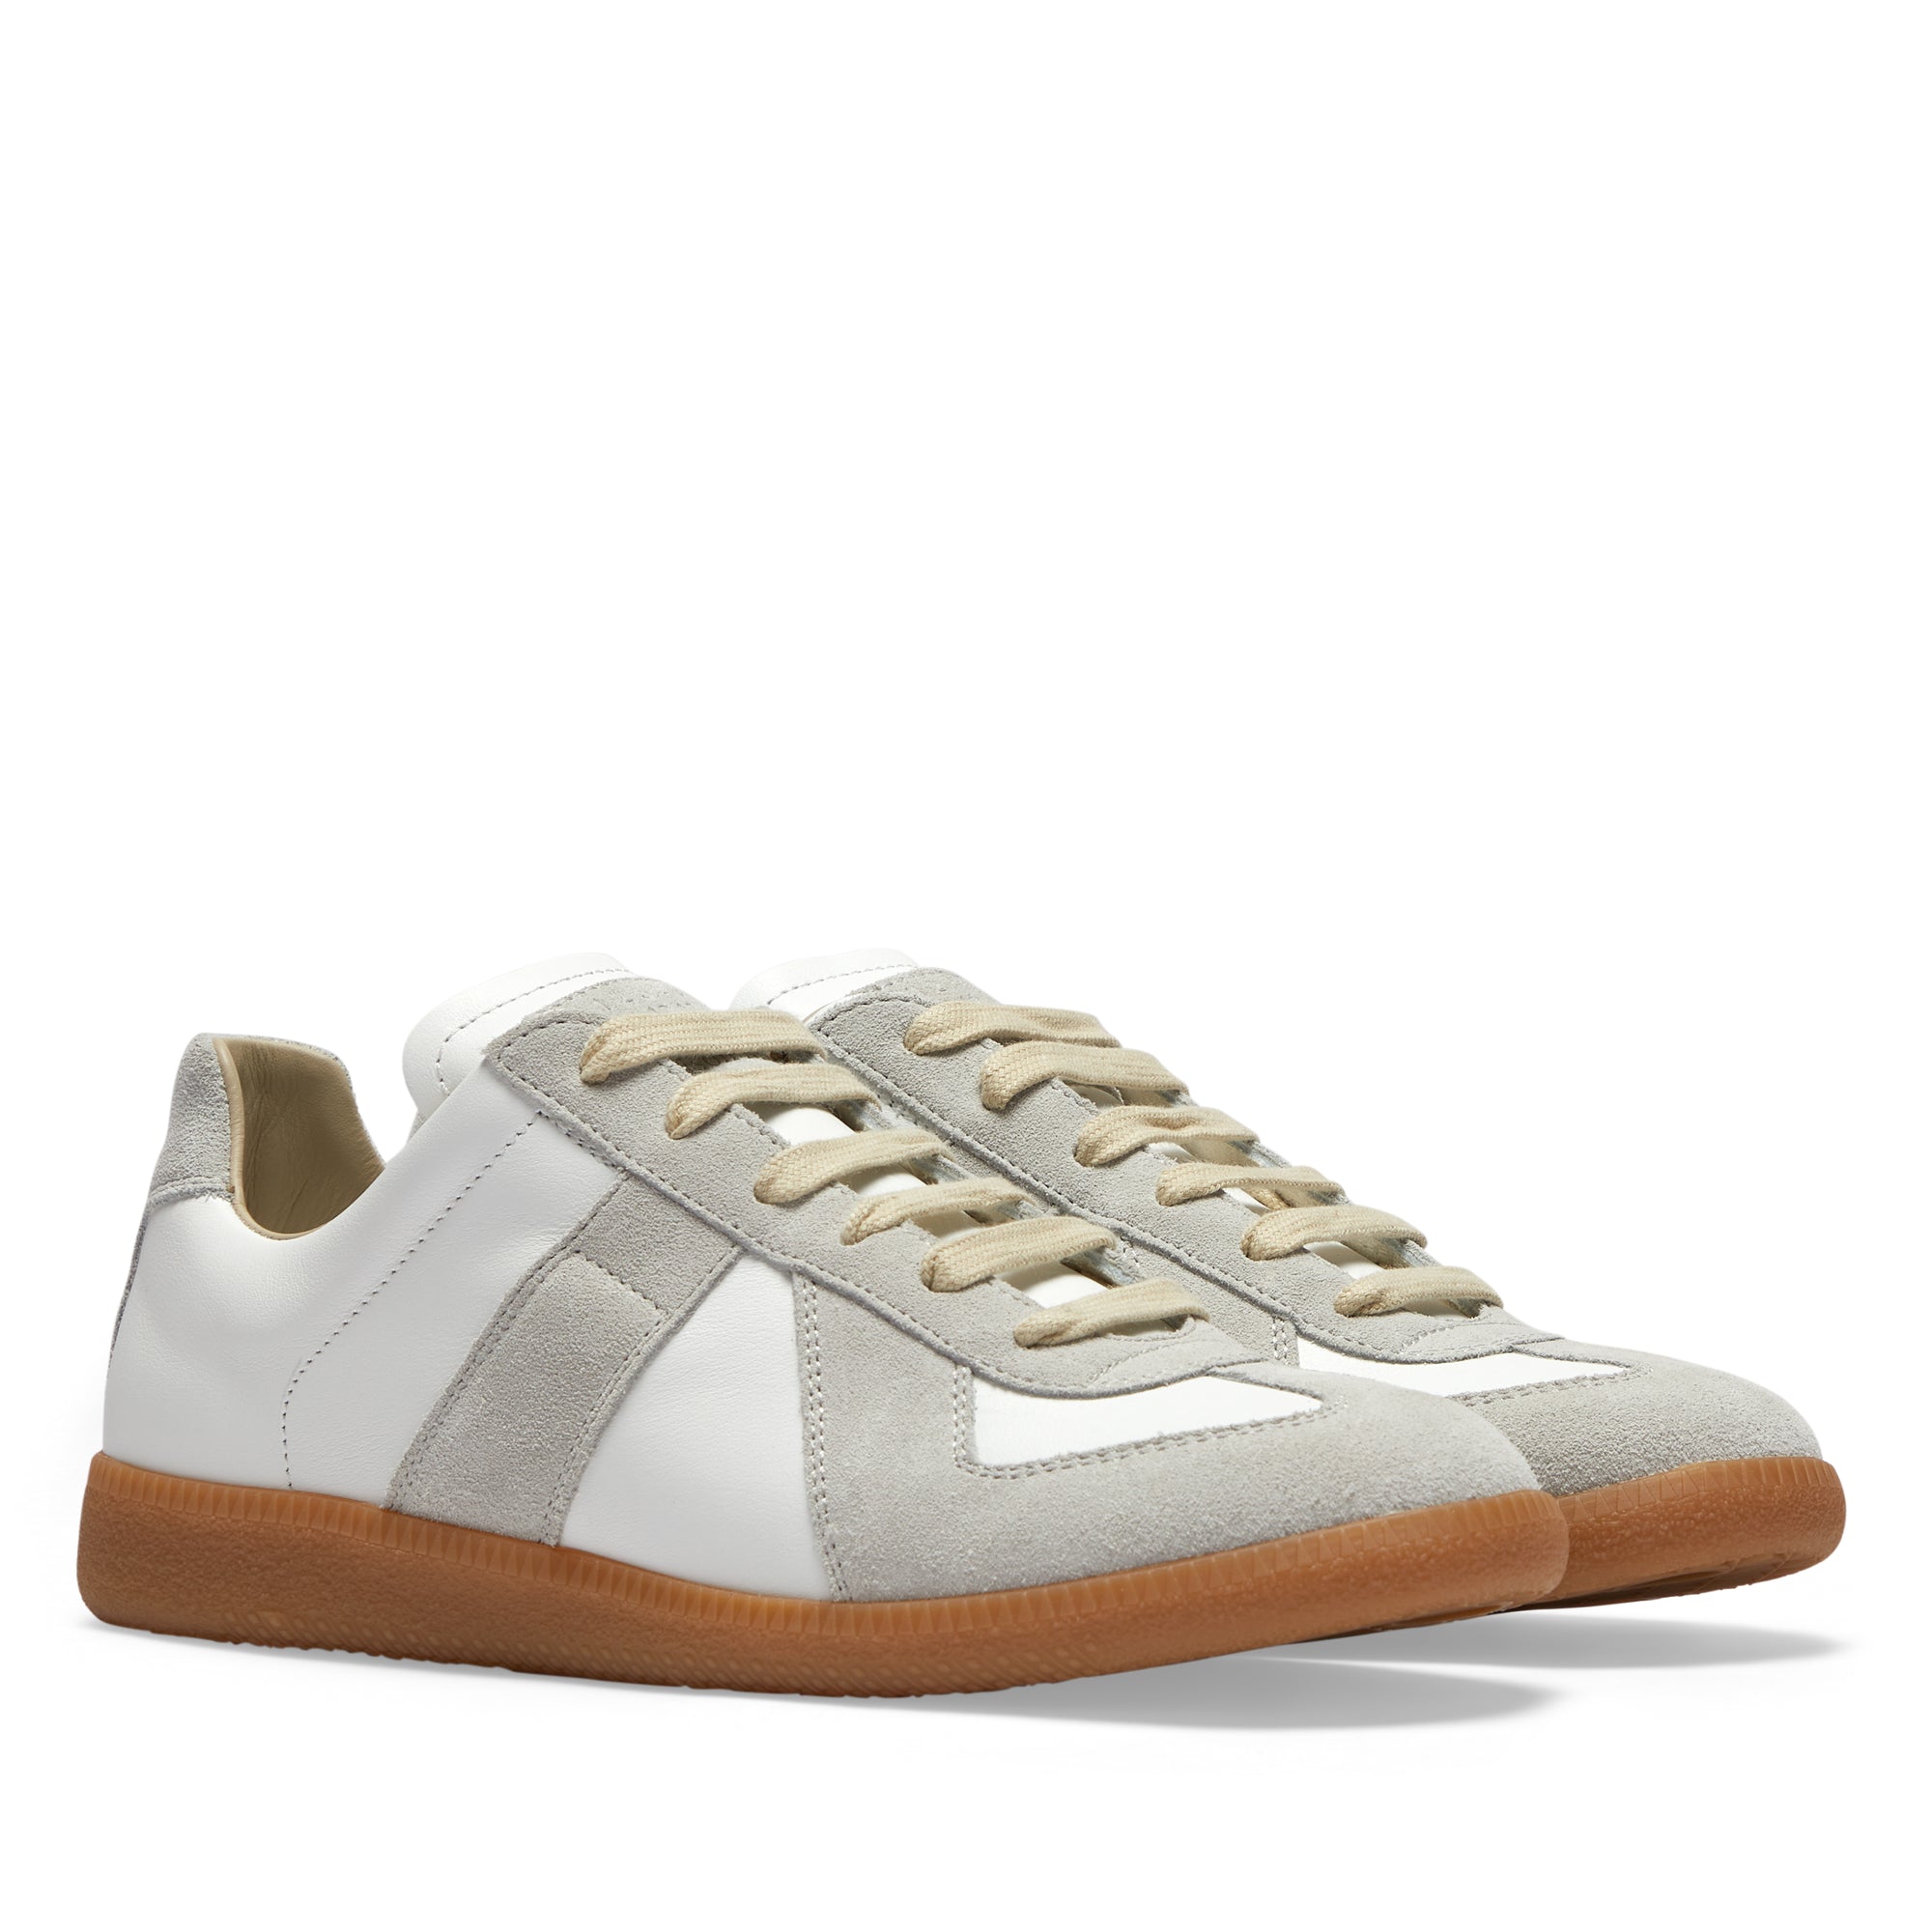 Maison Margiela - Men’s Replica Sneakers - (Off White) view 3